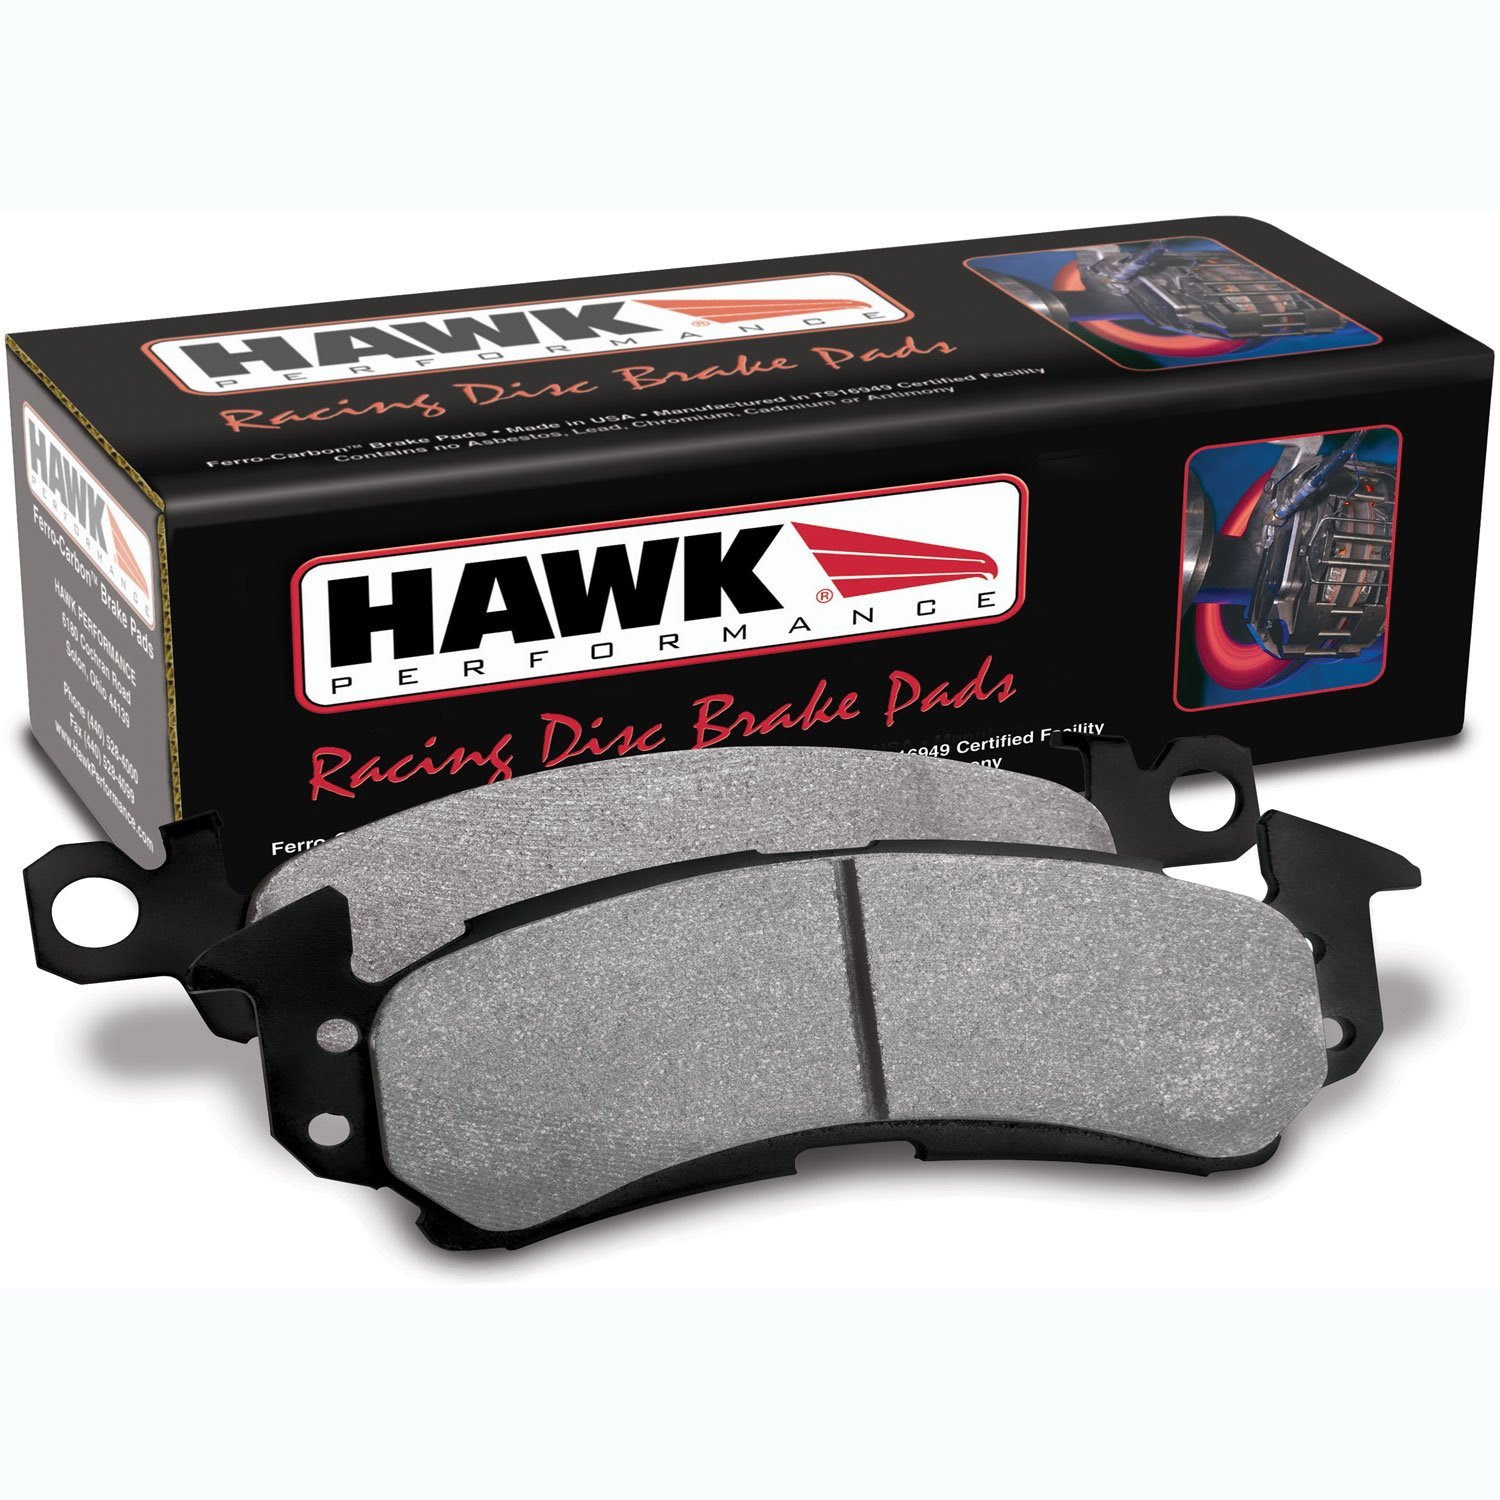 Disc Brake Pad HT-10 w/0.628 Thickness